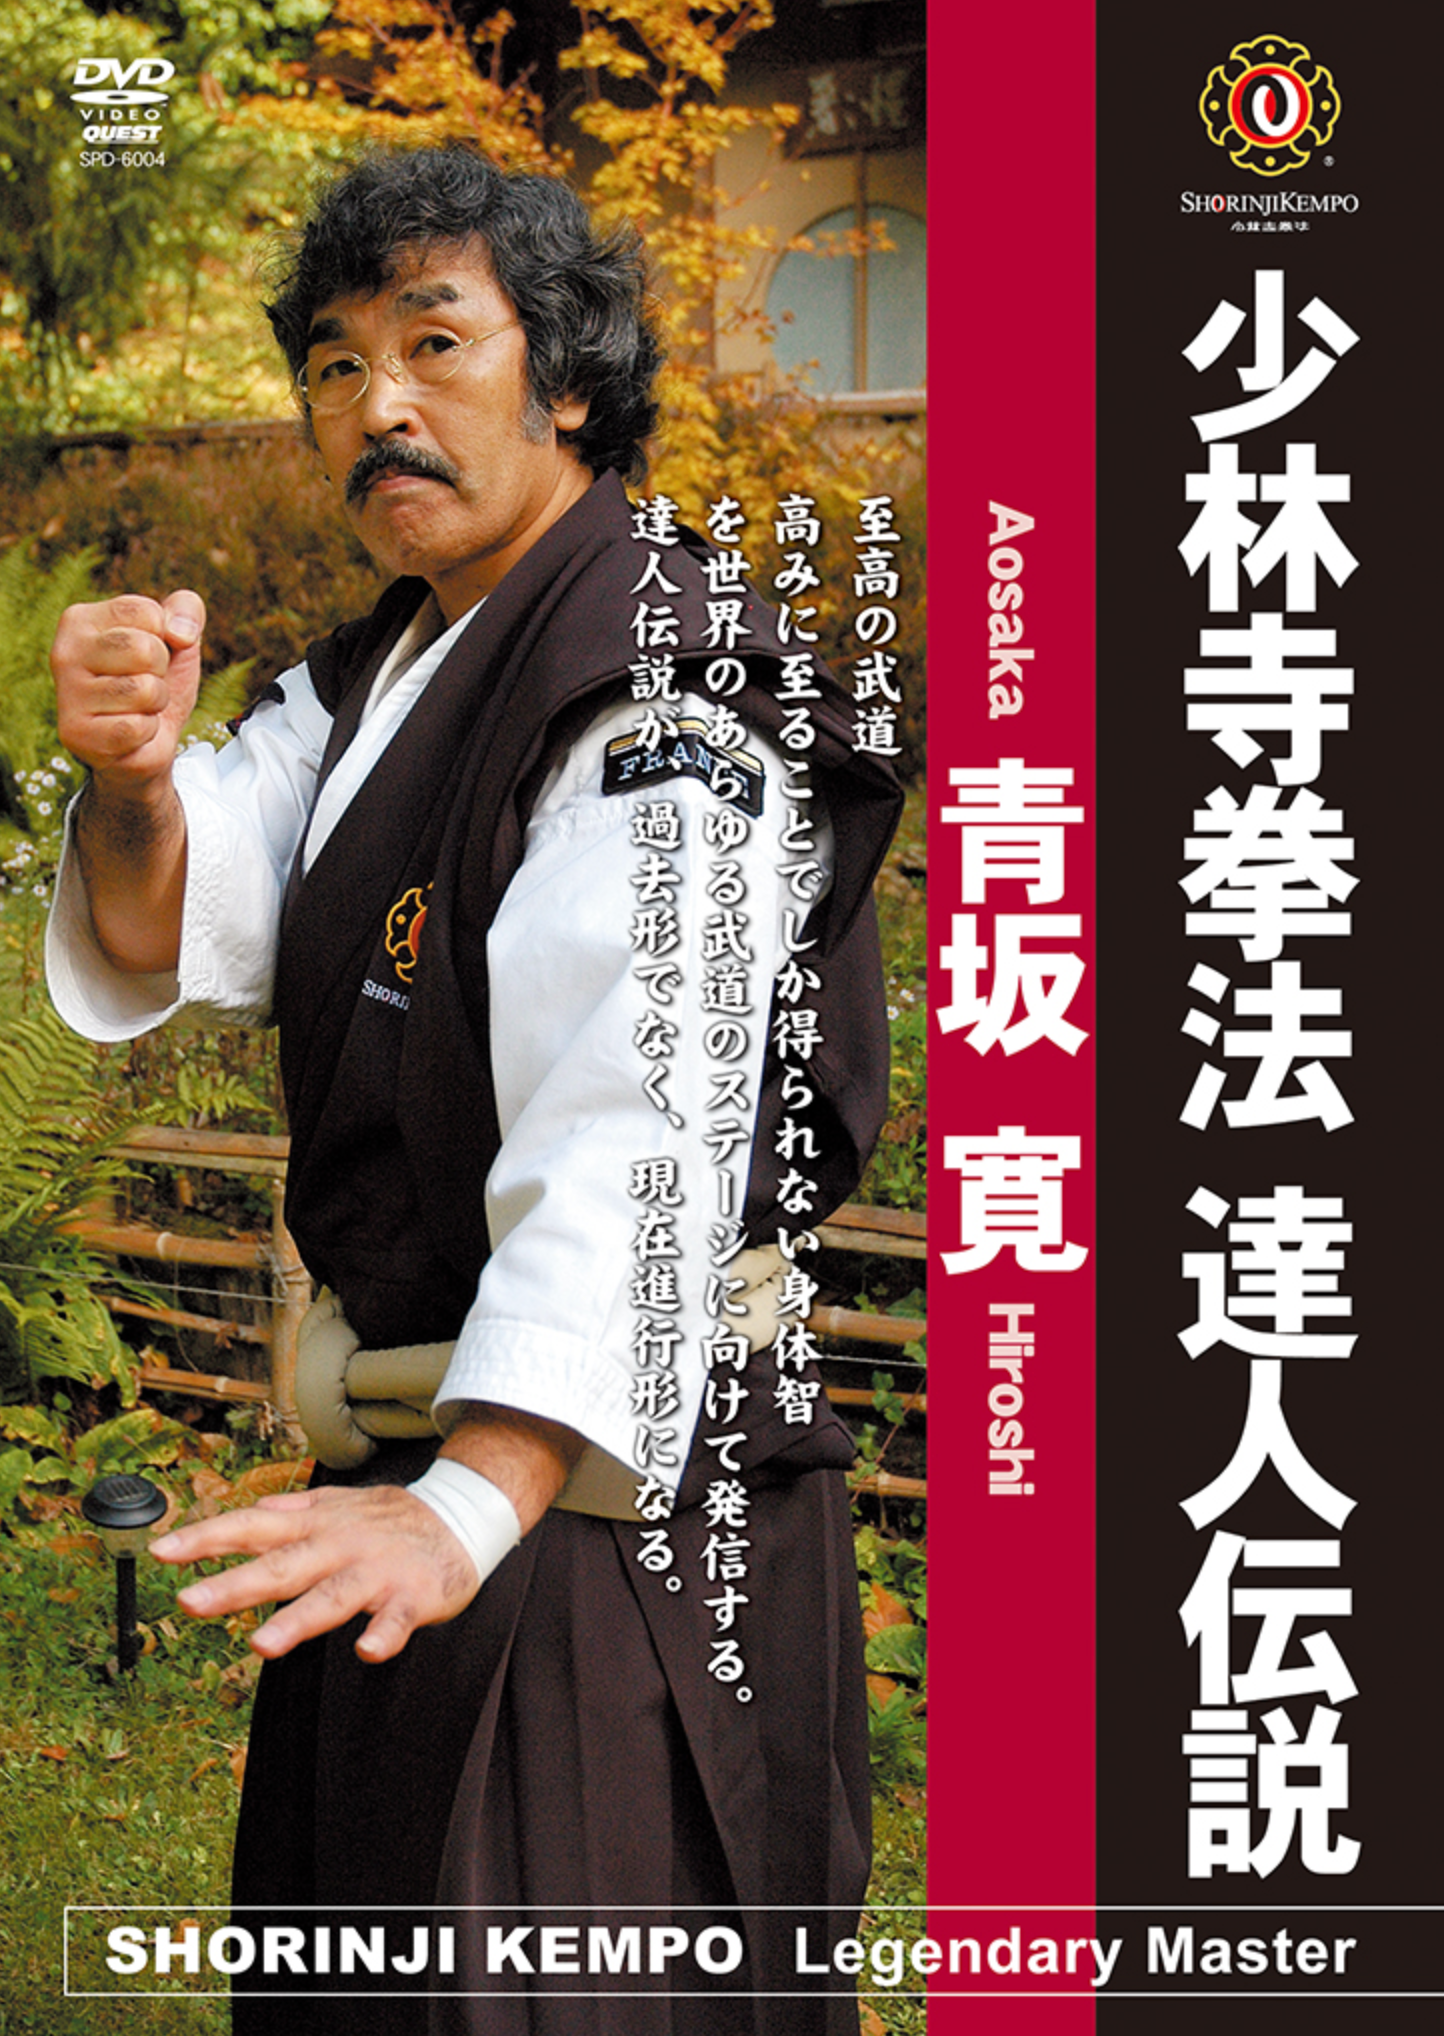 DVD 少林寺拳法の世界 ヨーロッパ編 - 趣味、スポーツ、実用